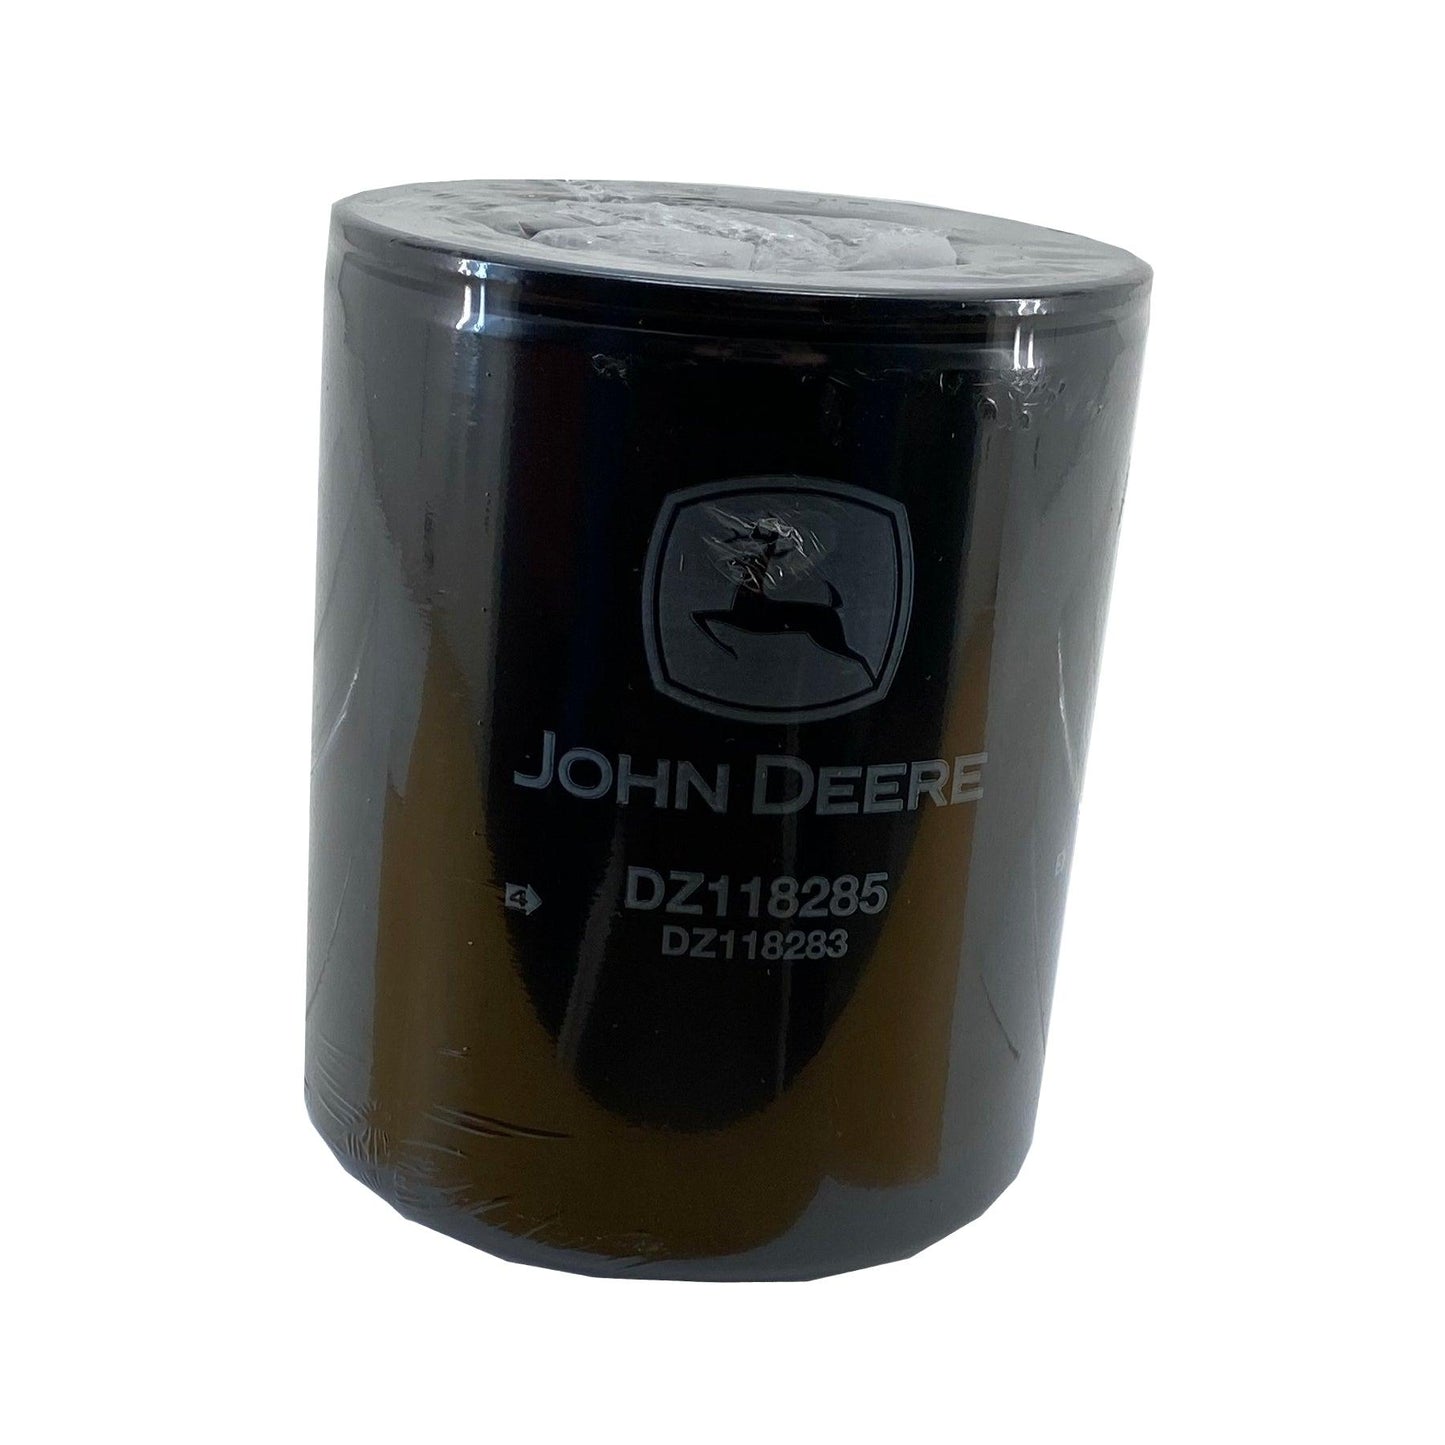 John Deere Original Equipment Filter Kit - DZ118283 – AGNLAWN.com